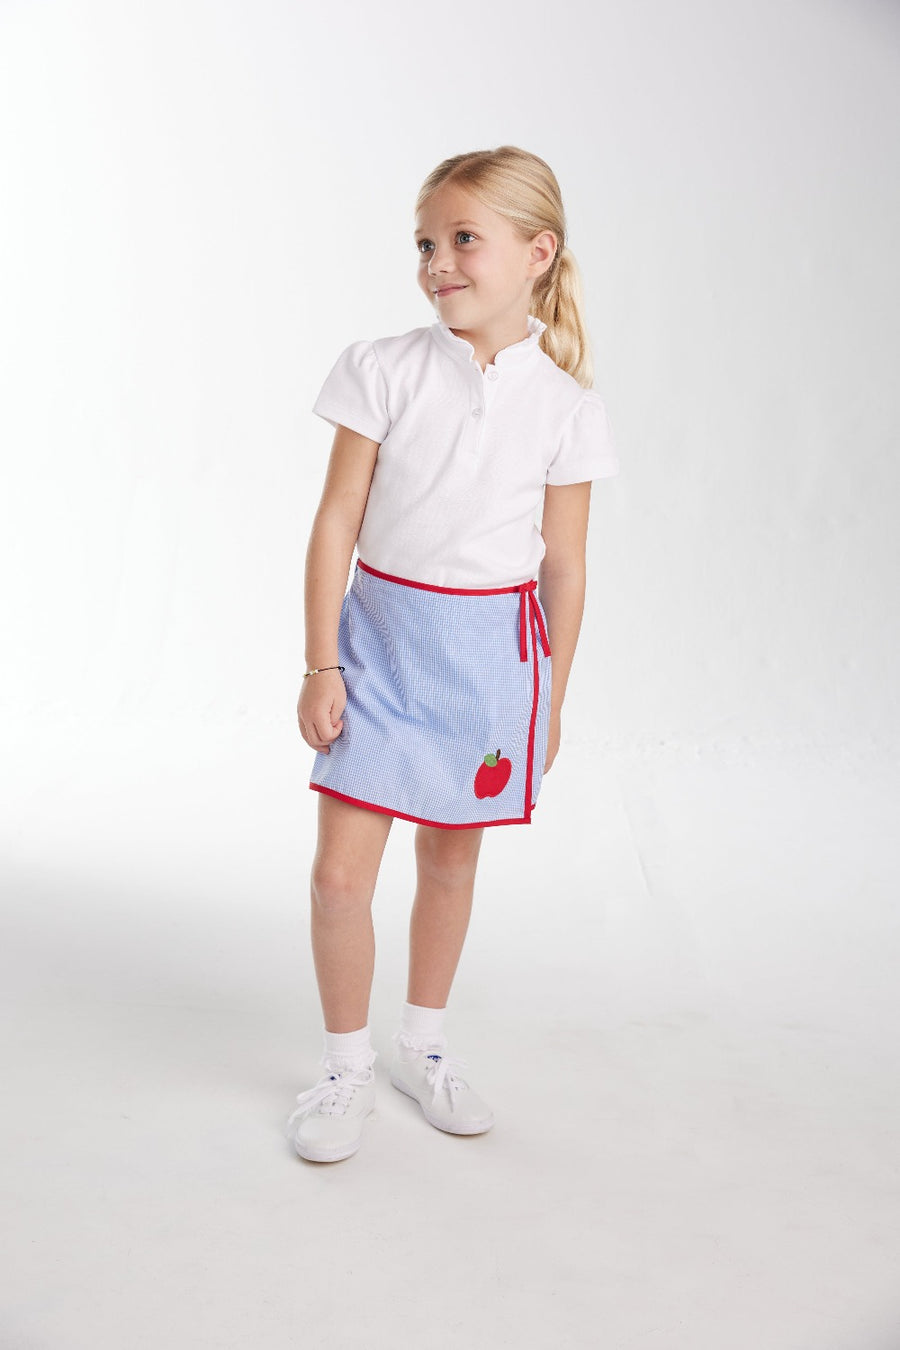 Little English girl's ruffled polo shirt, white knit